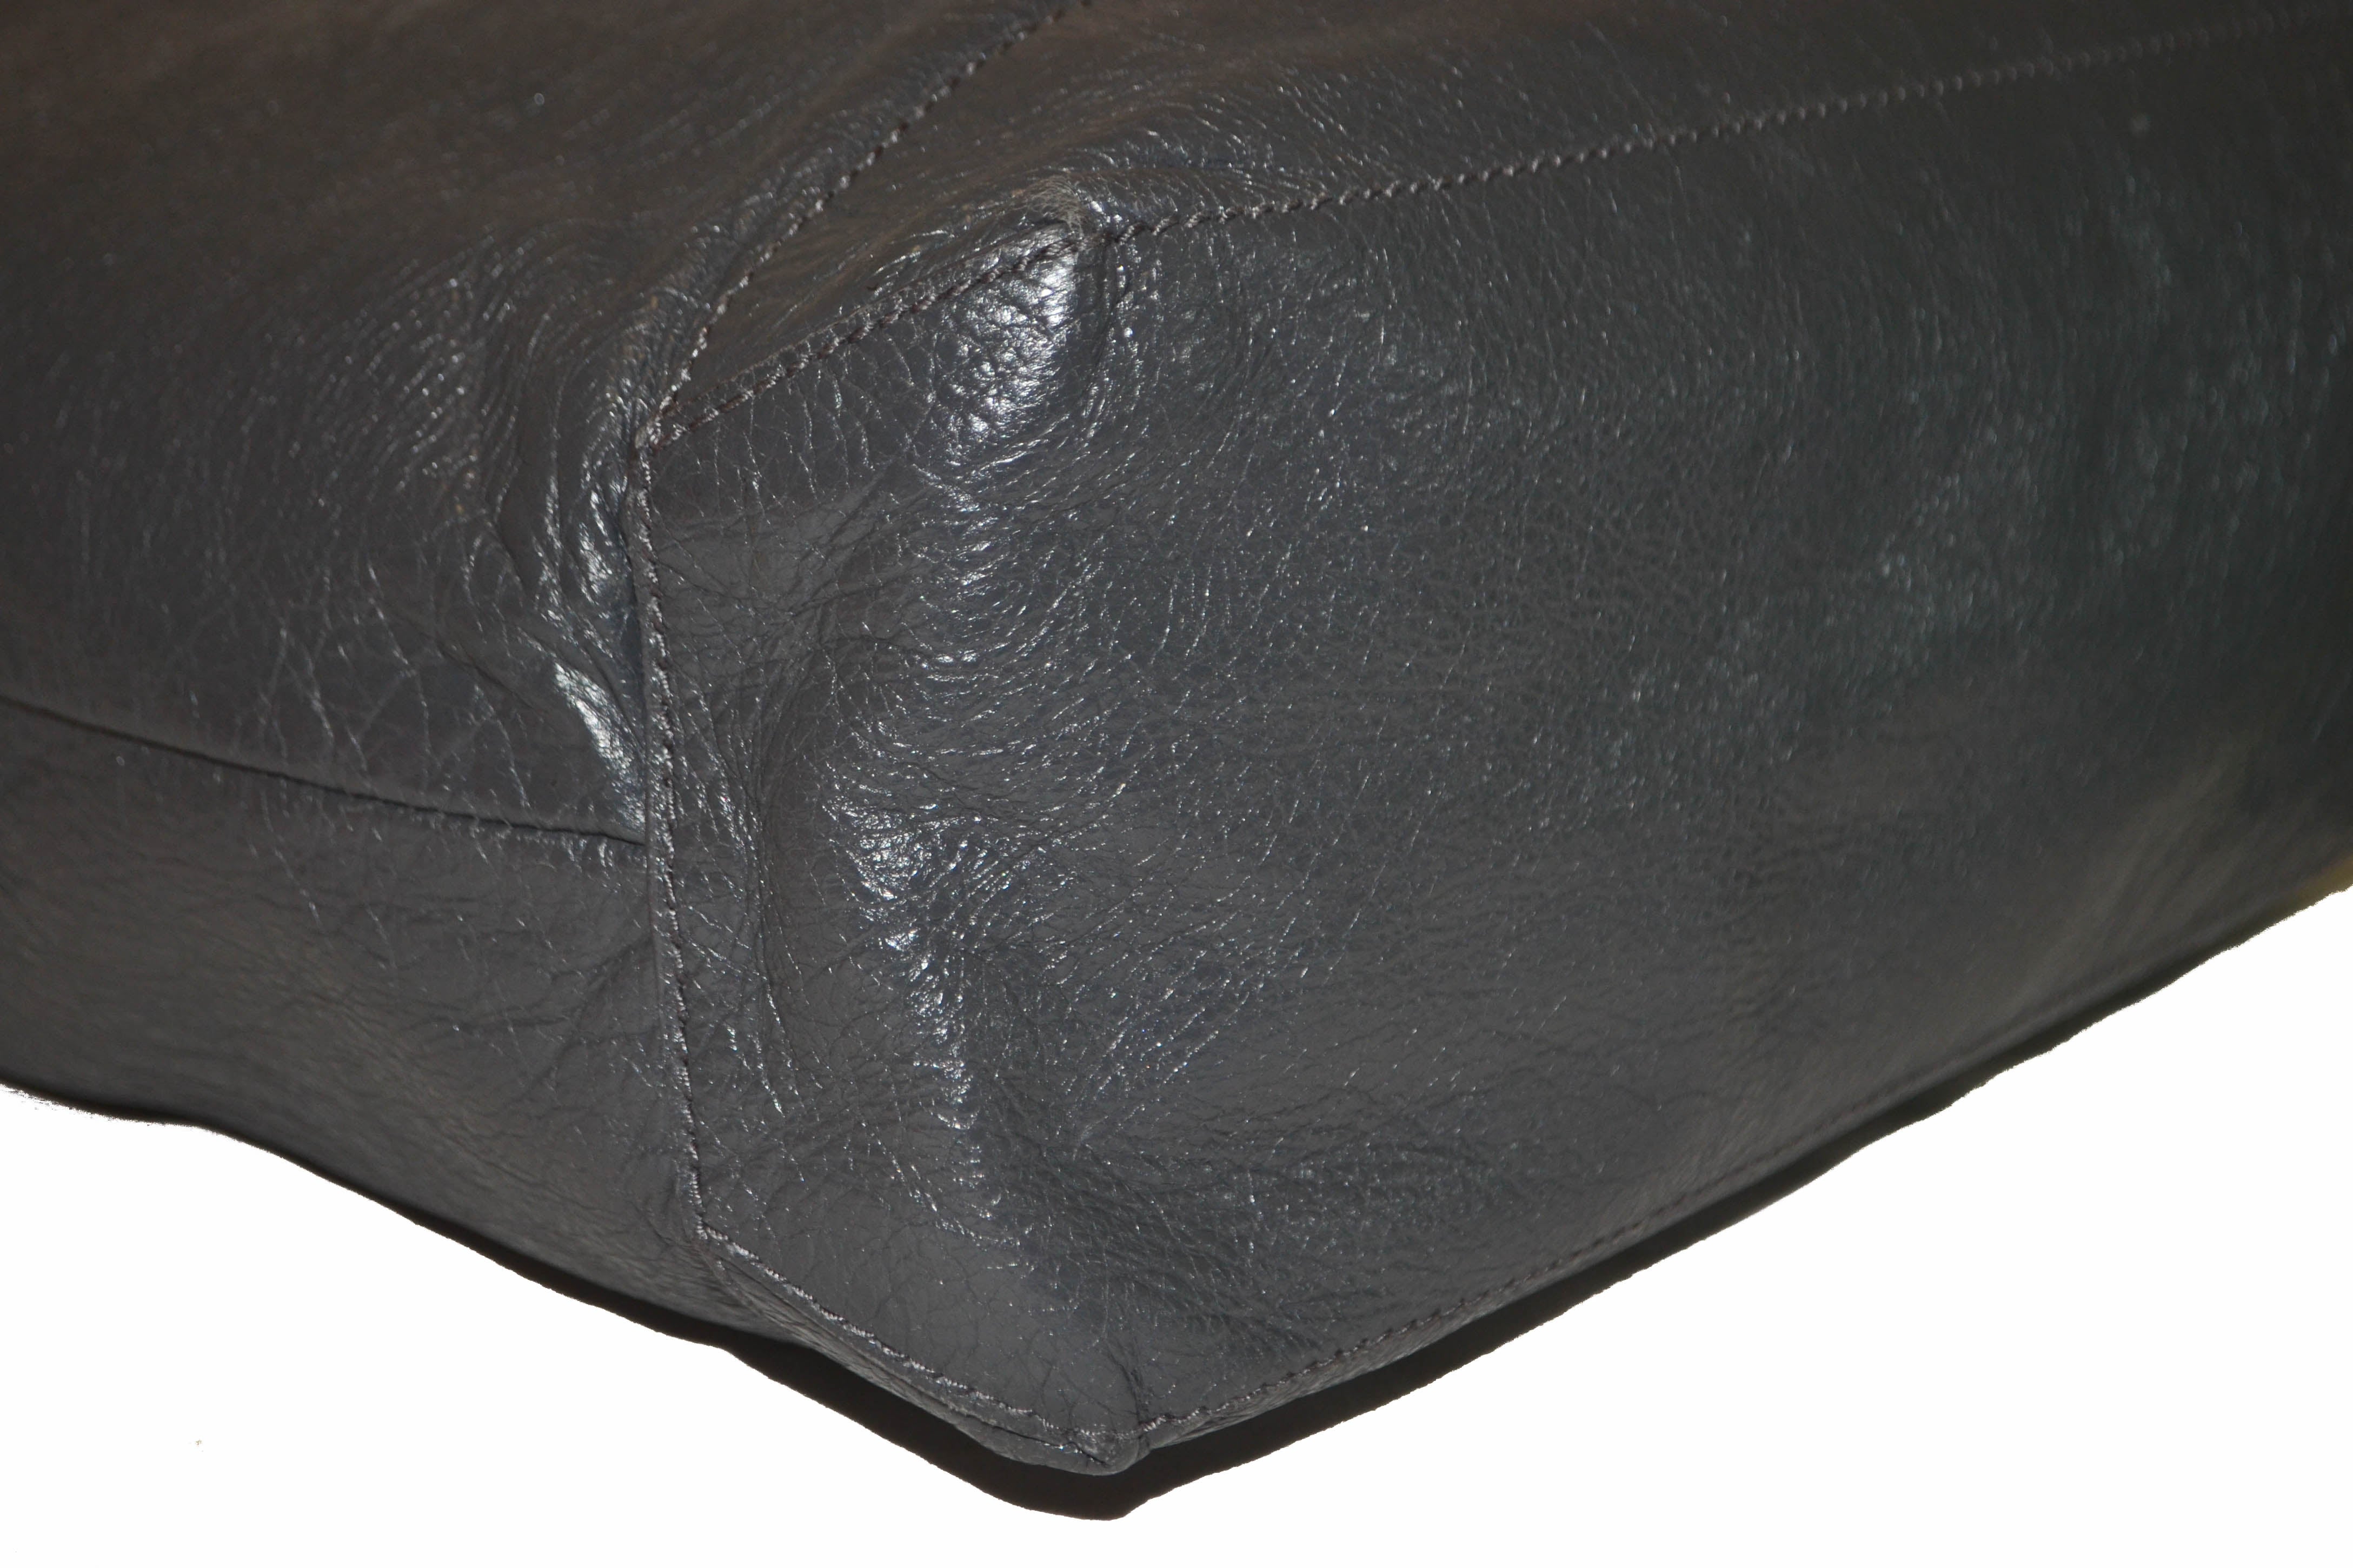 Authentic Balenciaga Grey Lambskin Leather Arena Messenger Bag